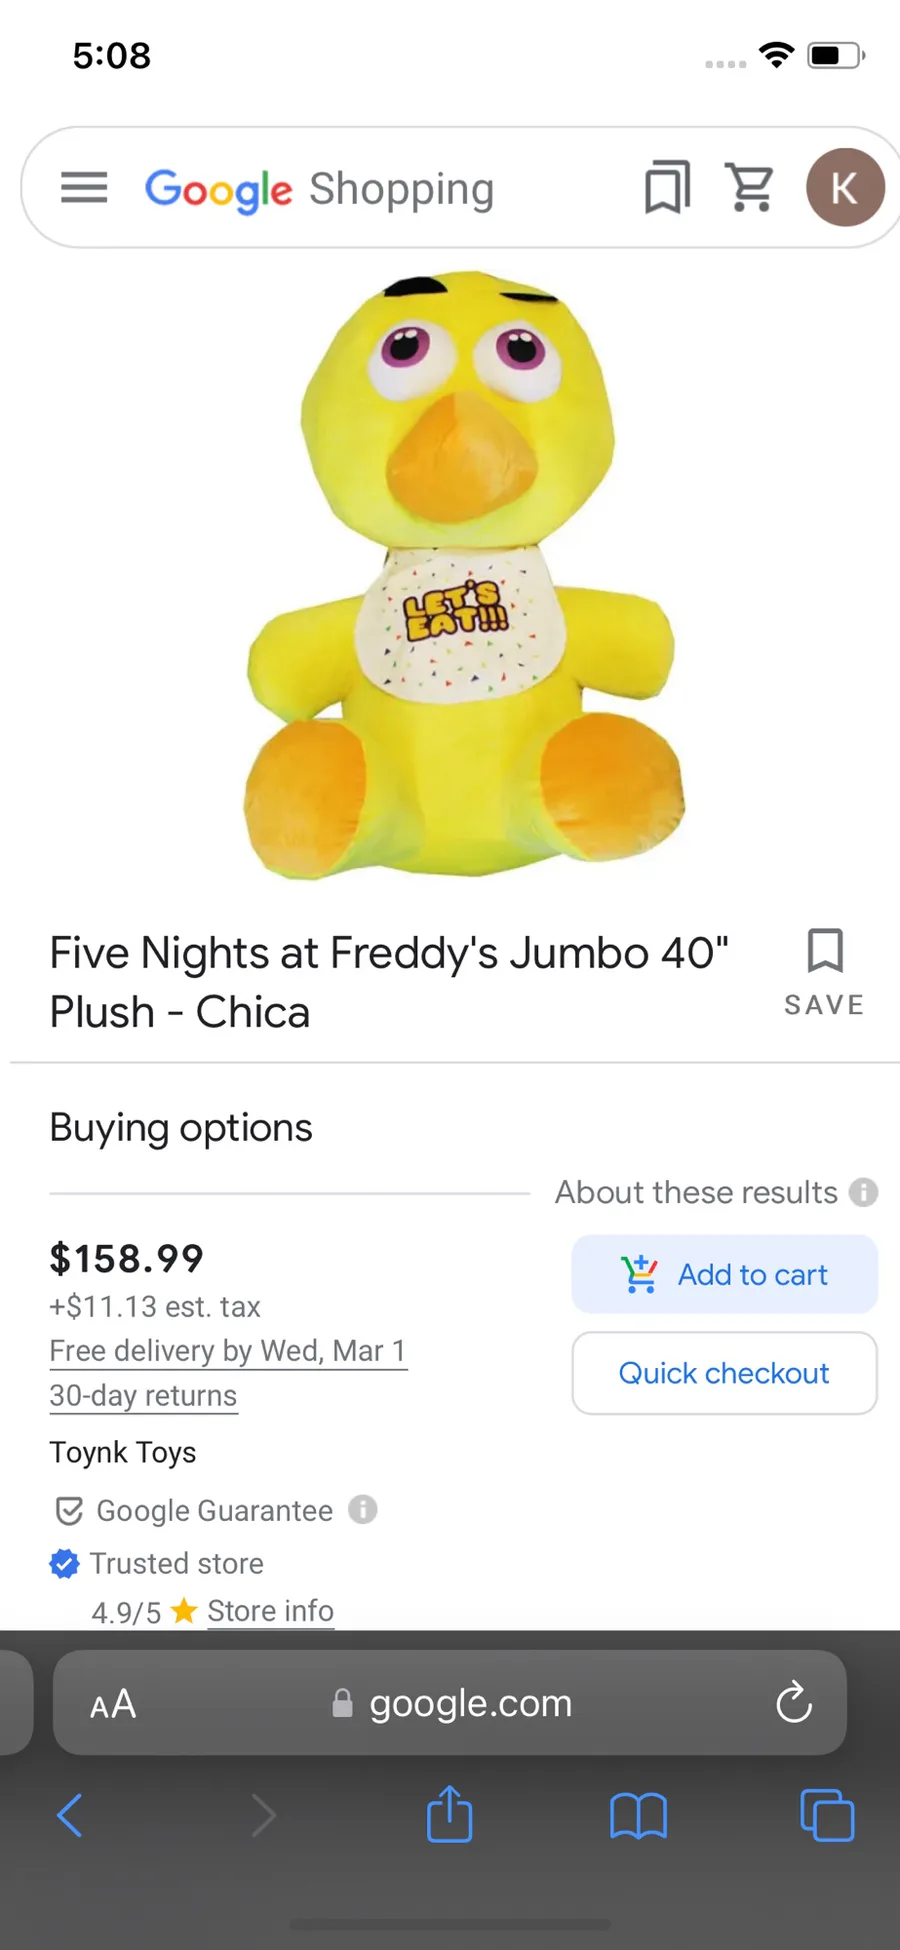 Five Nights At Freddy's Jumbo 40 Plush - Chica